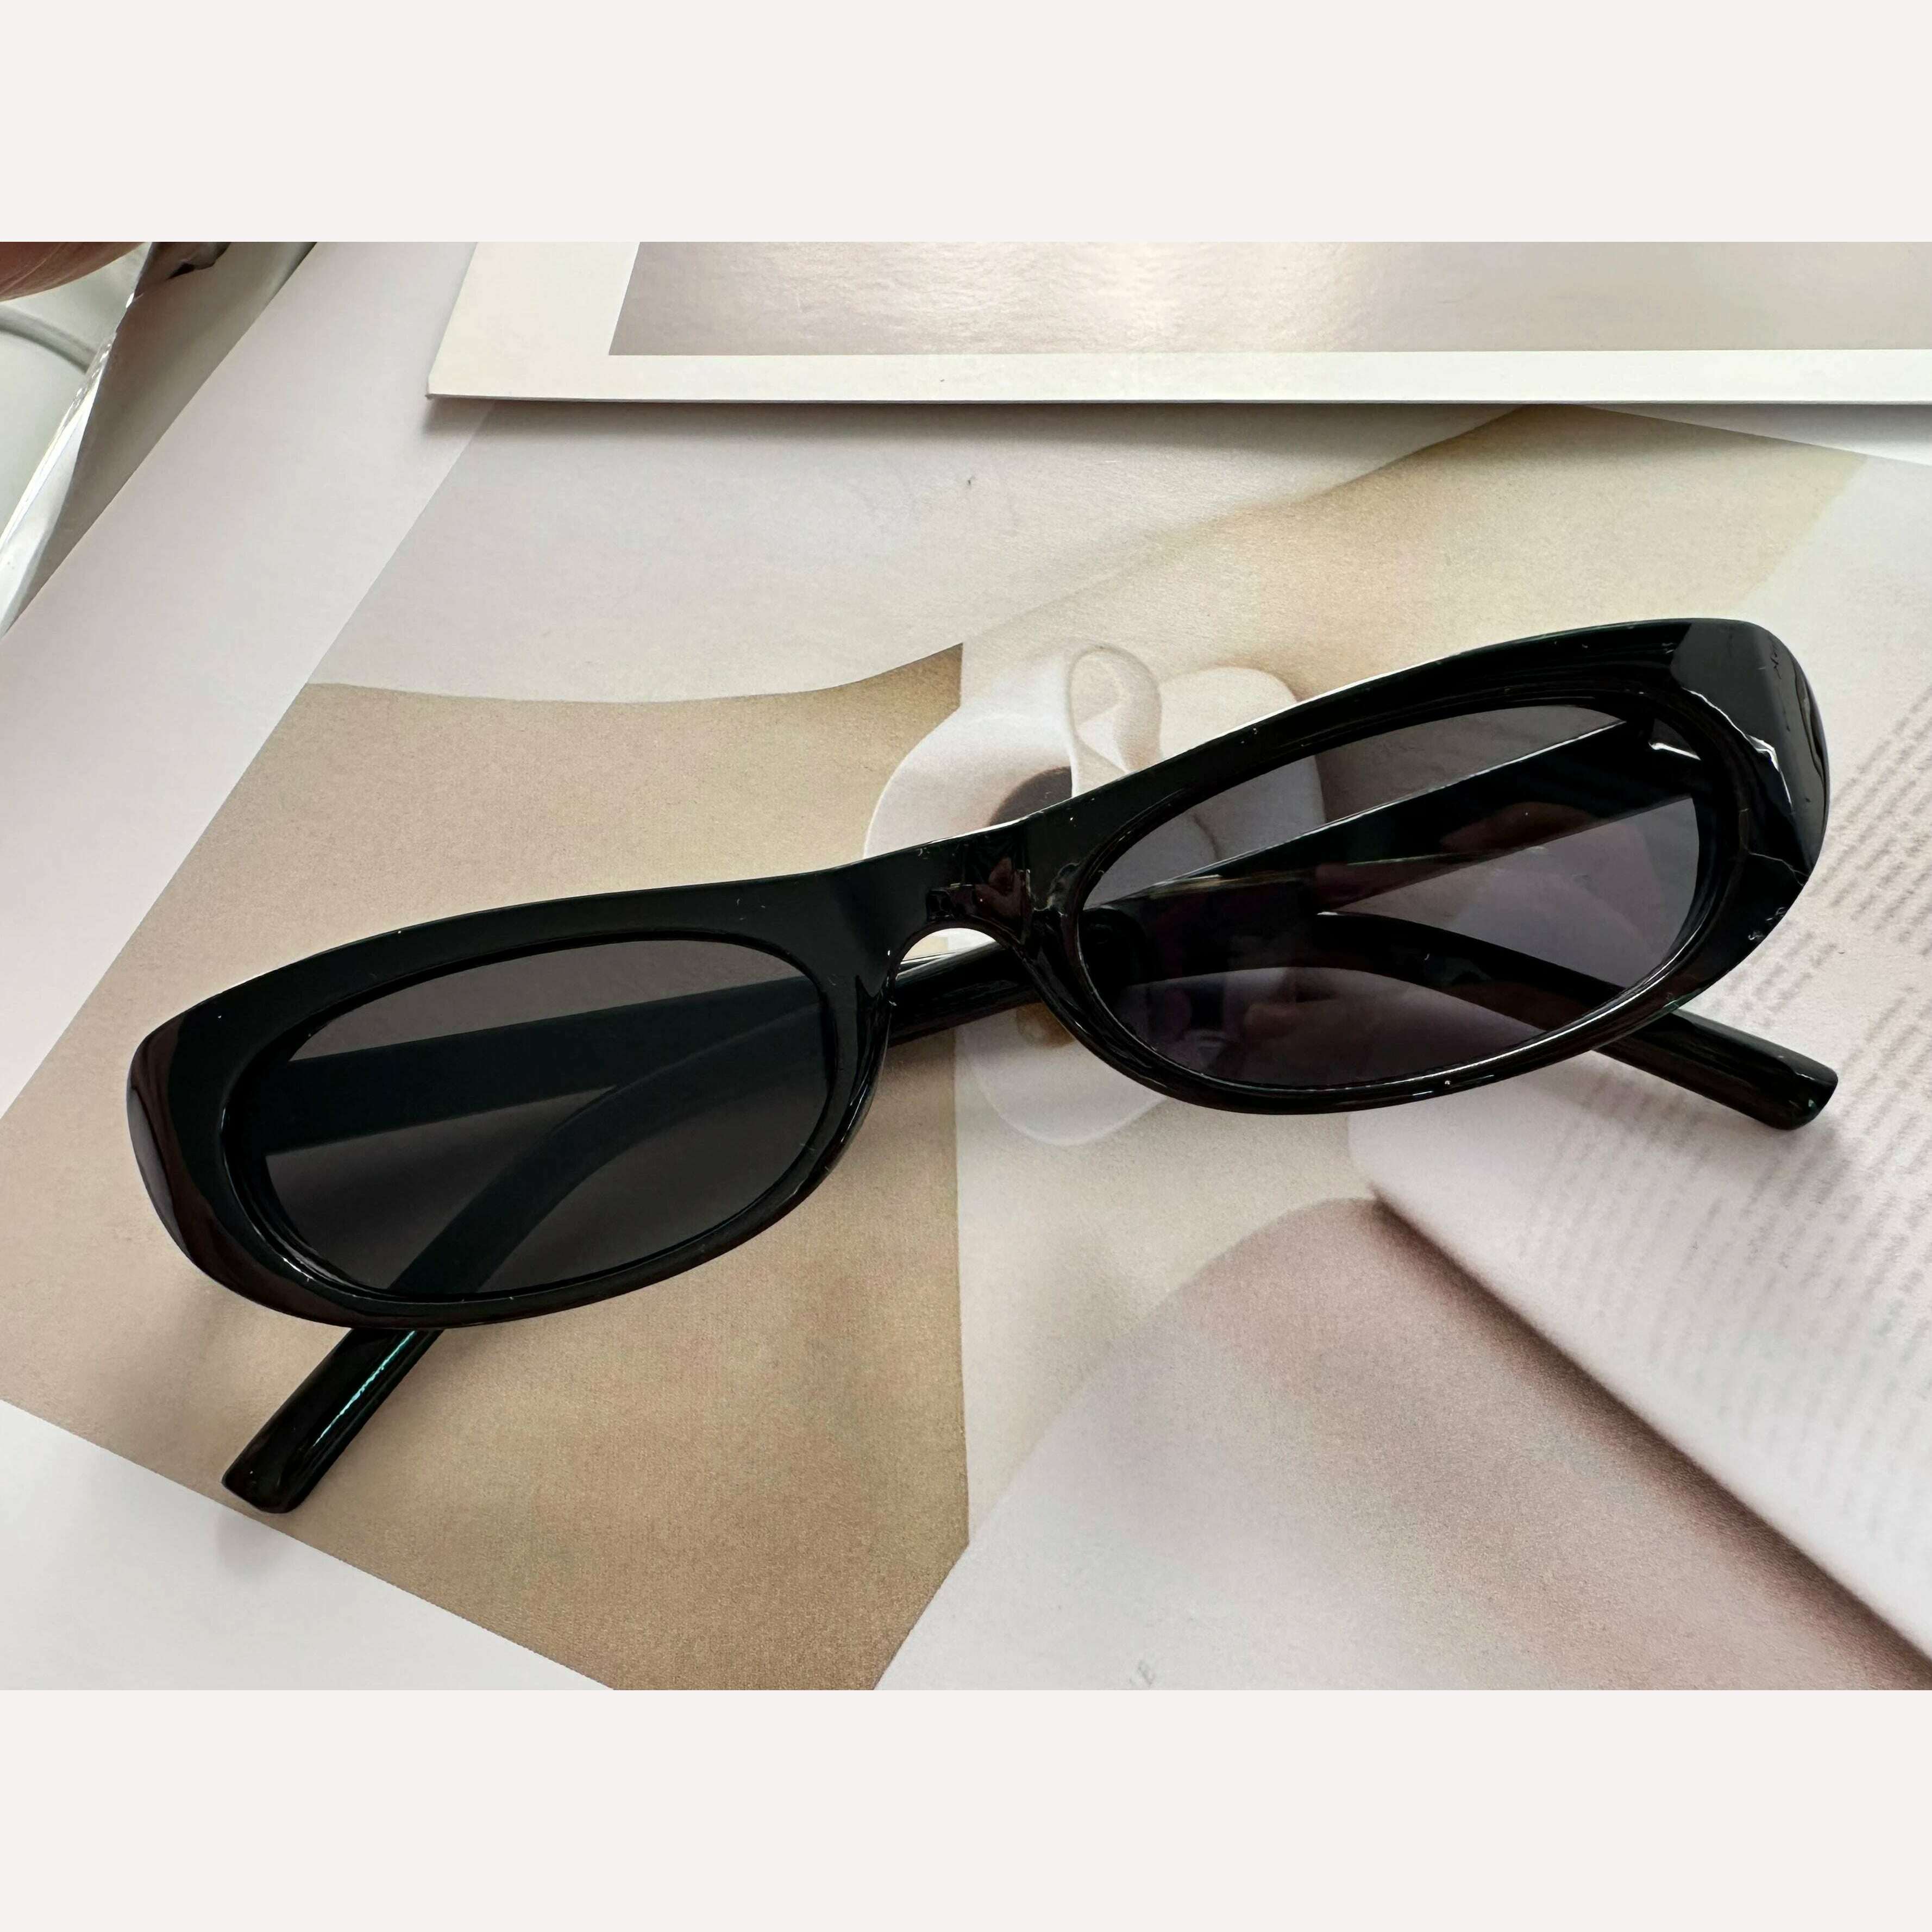 KIMLUD, Women's Retro Oval Sunglasses Black Small Frame Fashion Brand Trendy Hot Points Sun Glasses Ladies Star Shades UV400 Eyewear, KIMLUD Womens Clothes